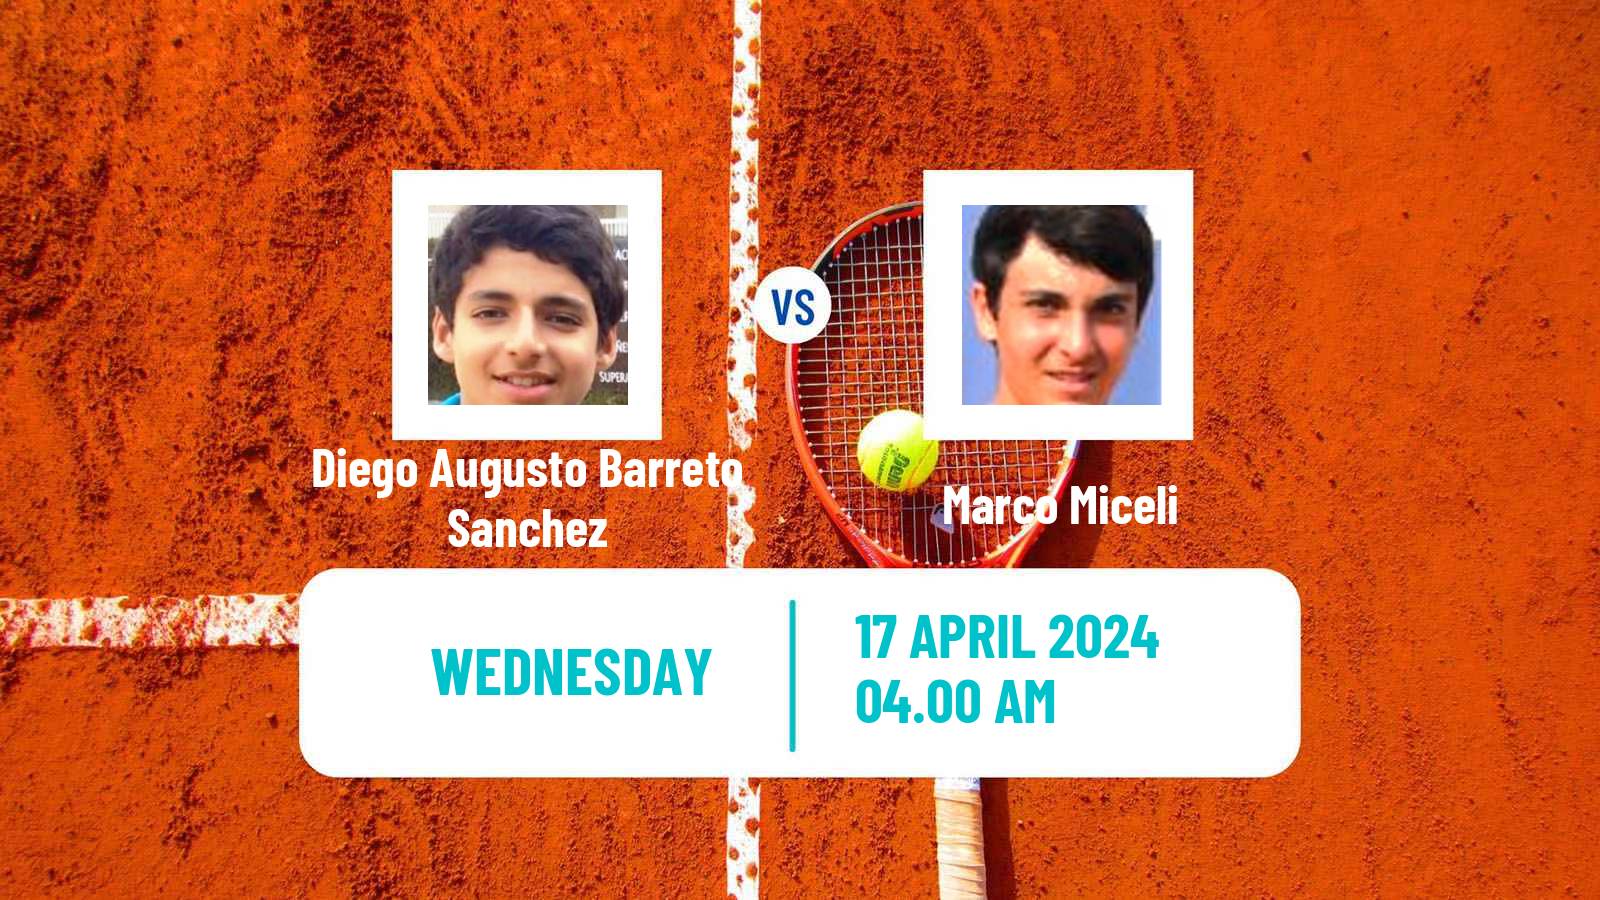 Tennis ITF M15 Telde 2 Men Diego Augusto Barreto Sanchez - Marco Miceli